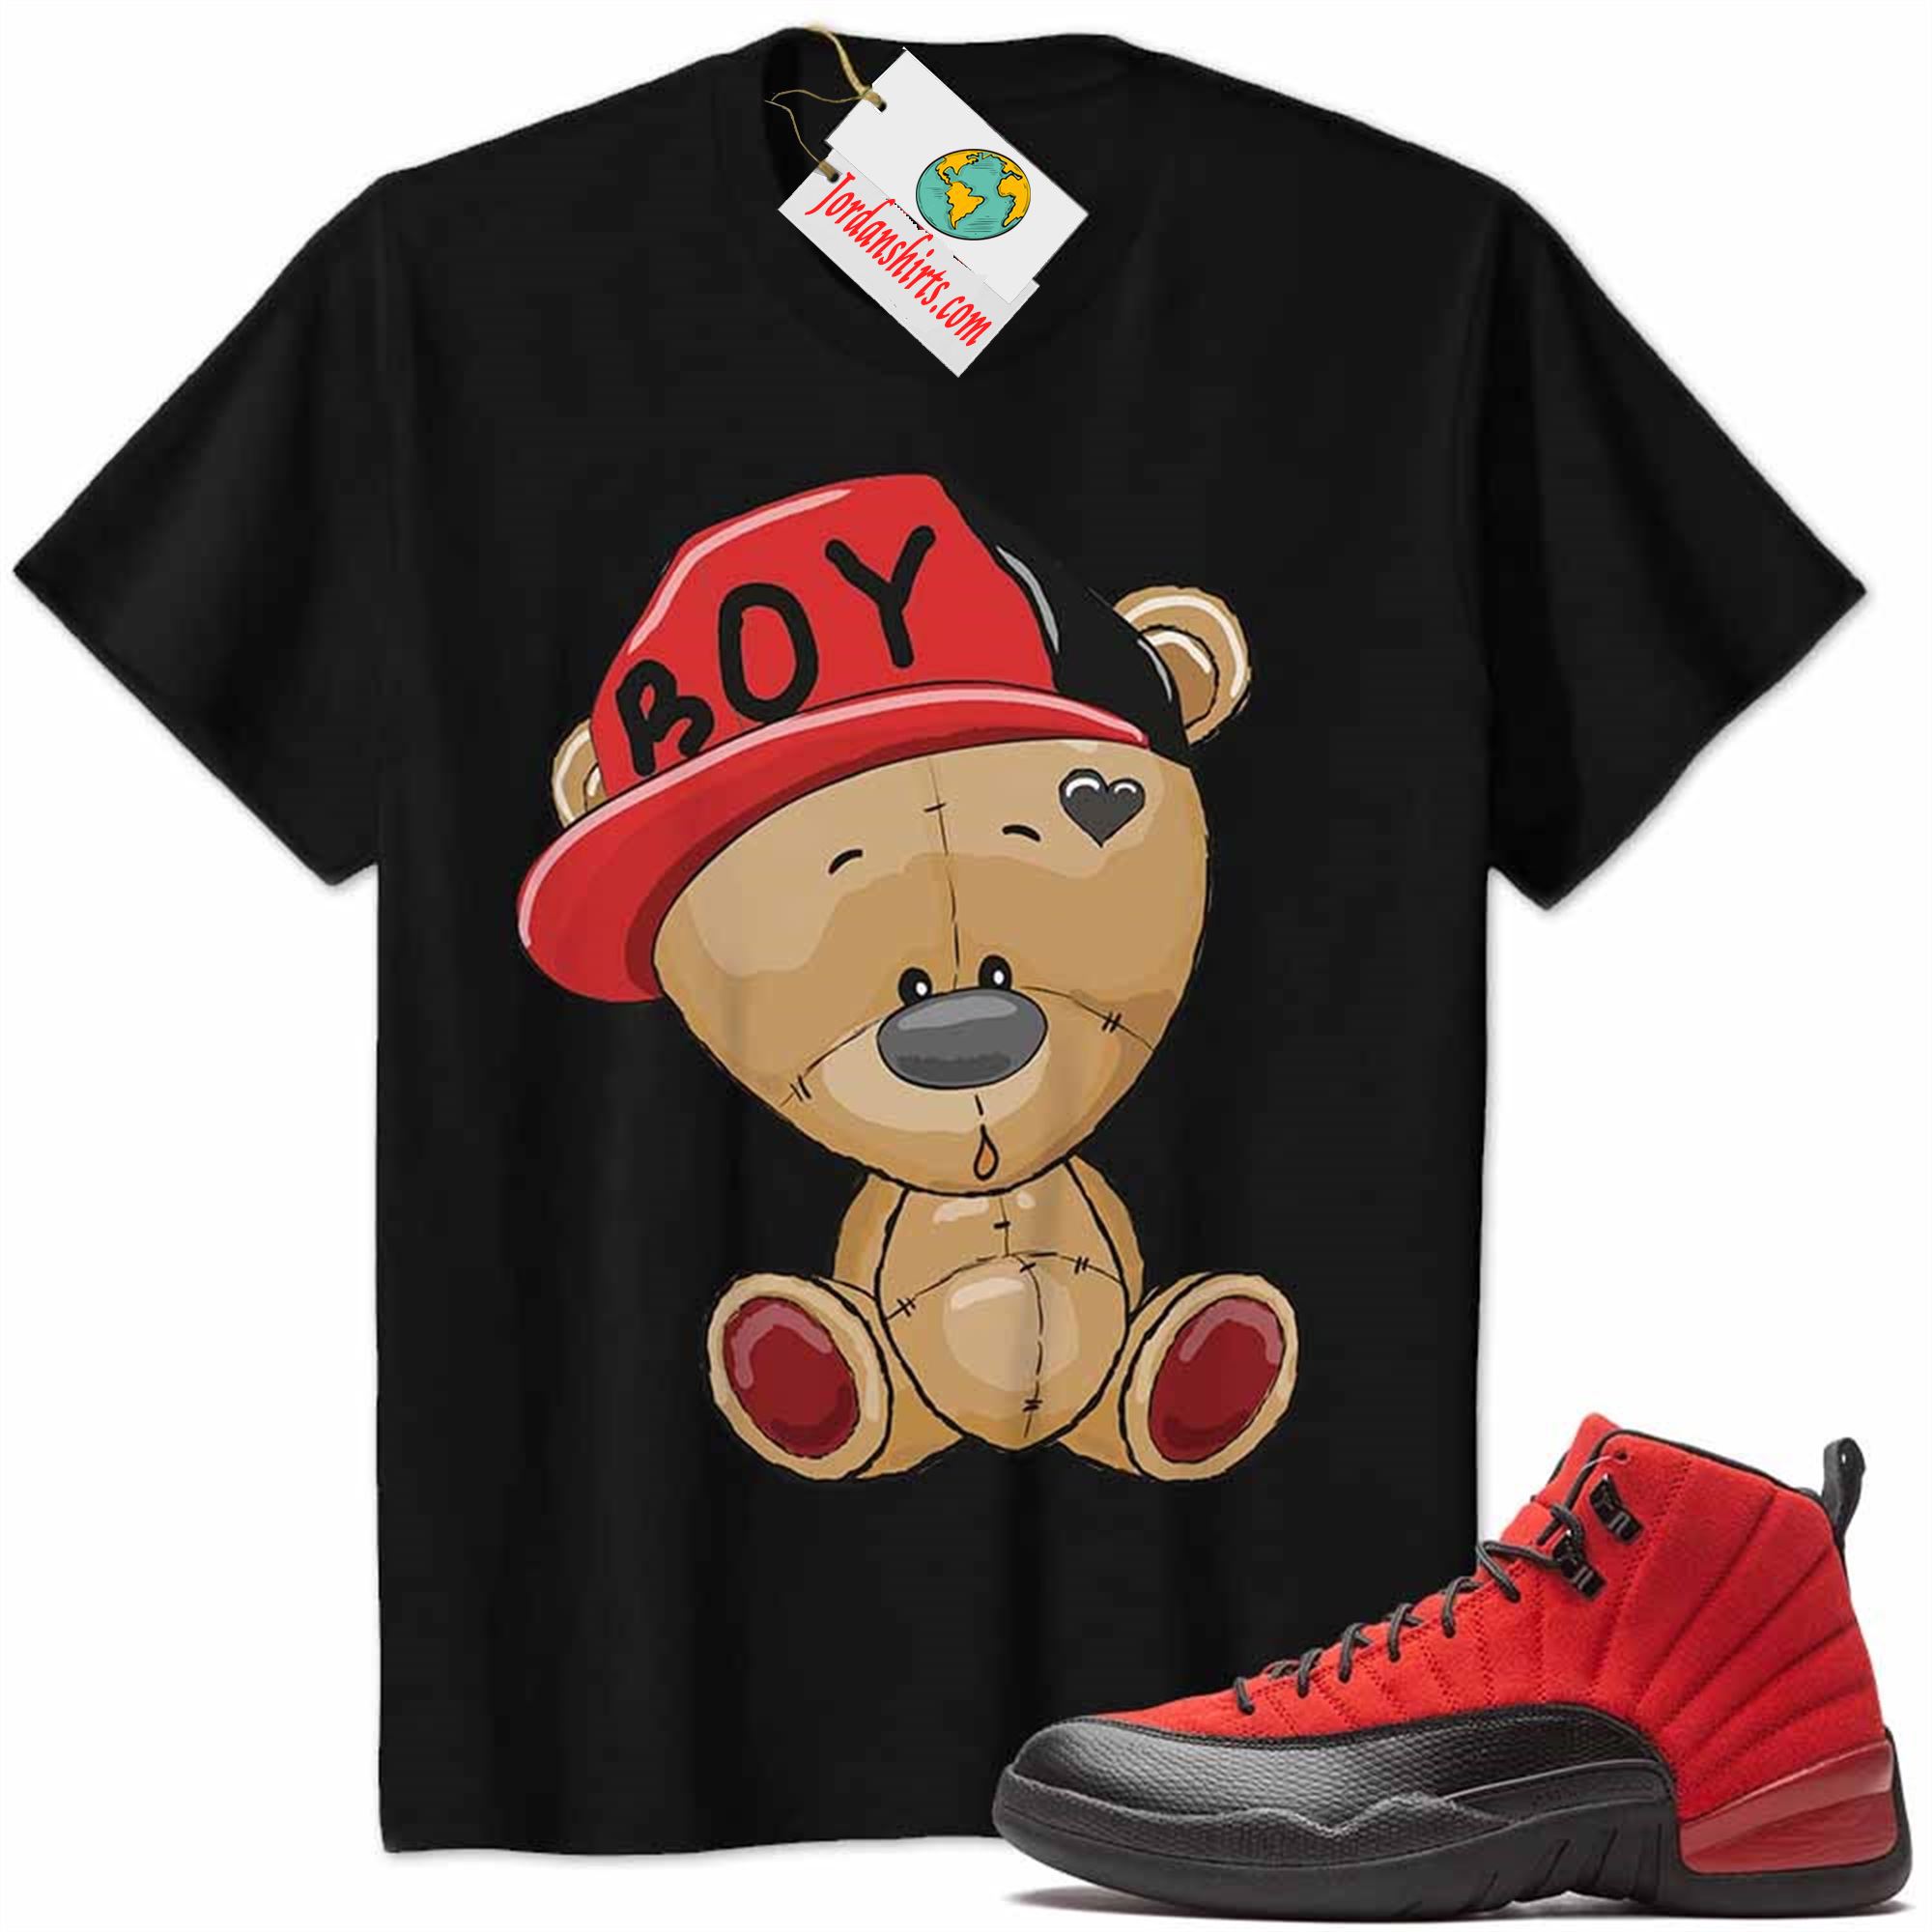 Jordan 12 Shirt, Jordan 12 Reverse Flu Game Shirt Cute Baby Teddy Bear Black Size Up To 5xl